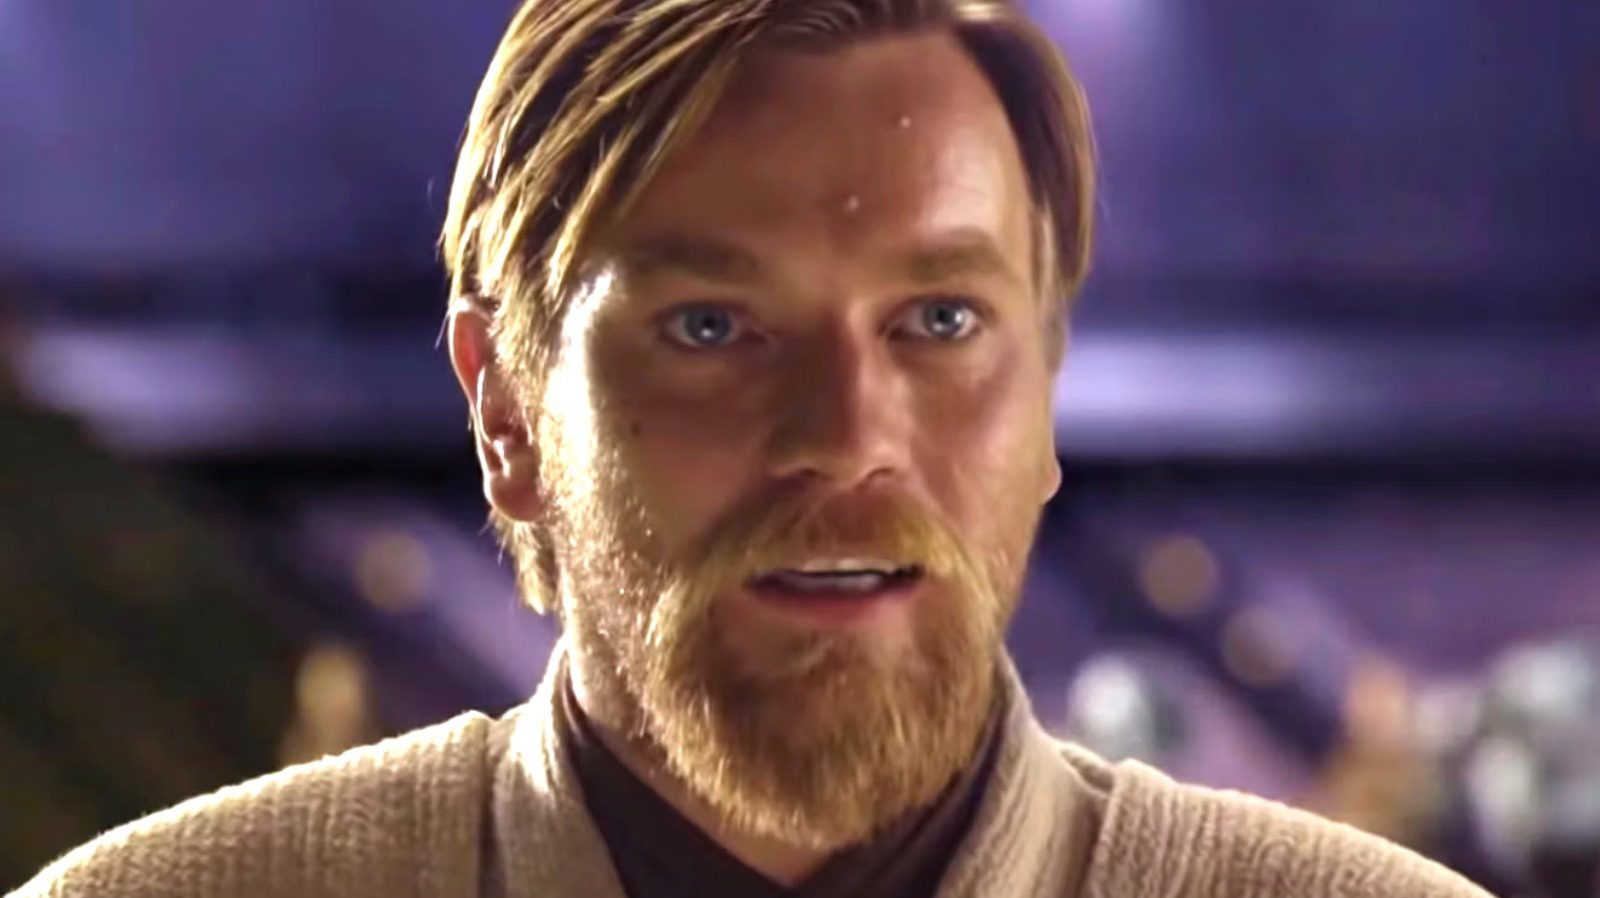 The Origin Of Obi-Wan's Most Meme-Able Line According To Ewan McGregor